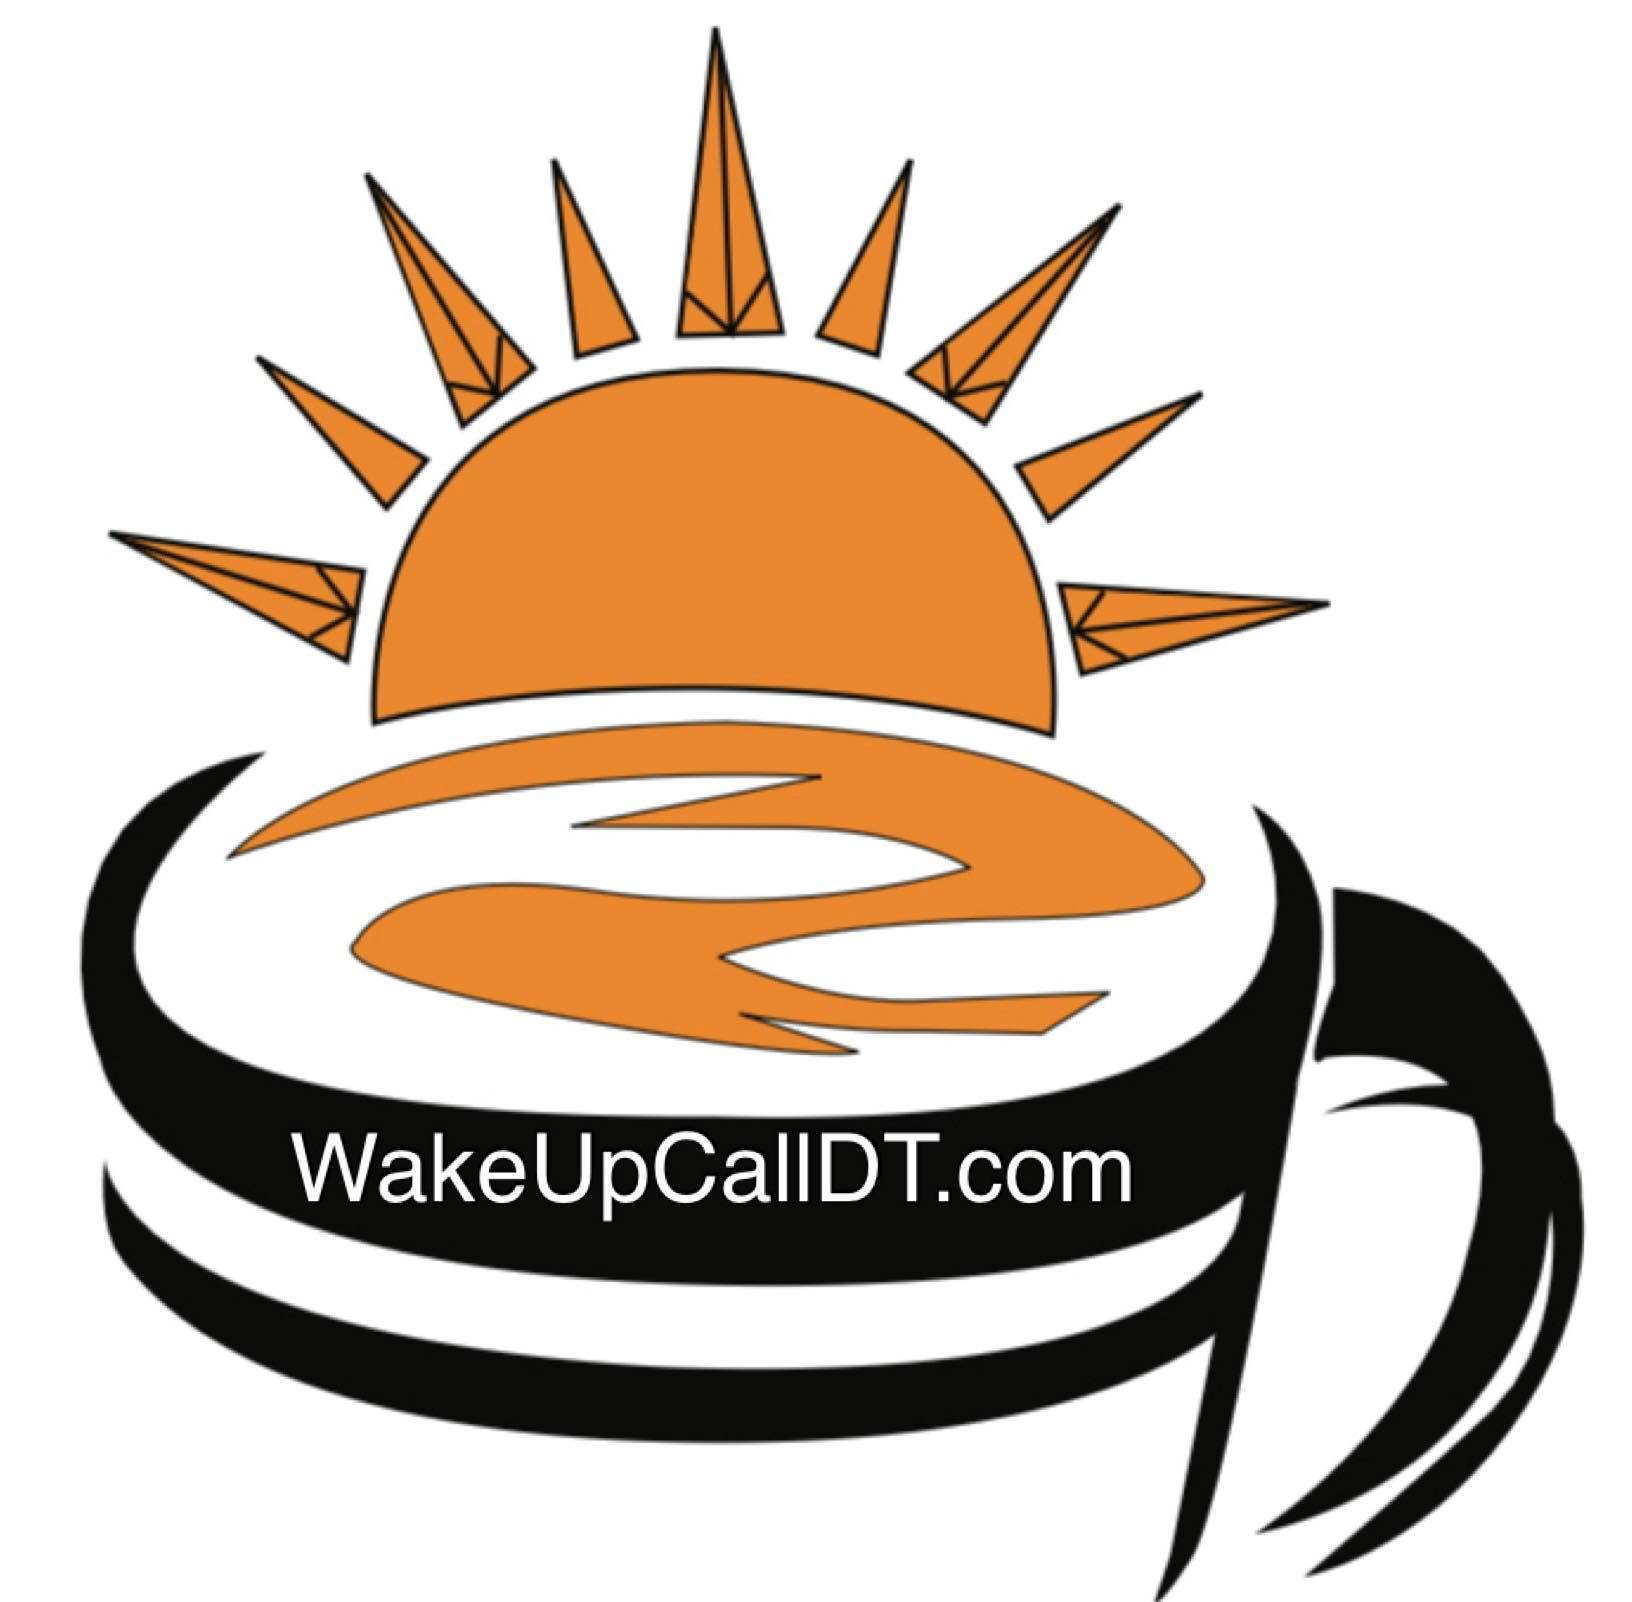 wakeupcalldt.podbean.com